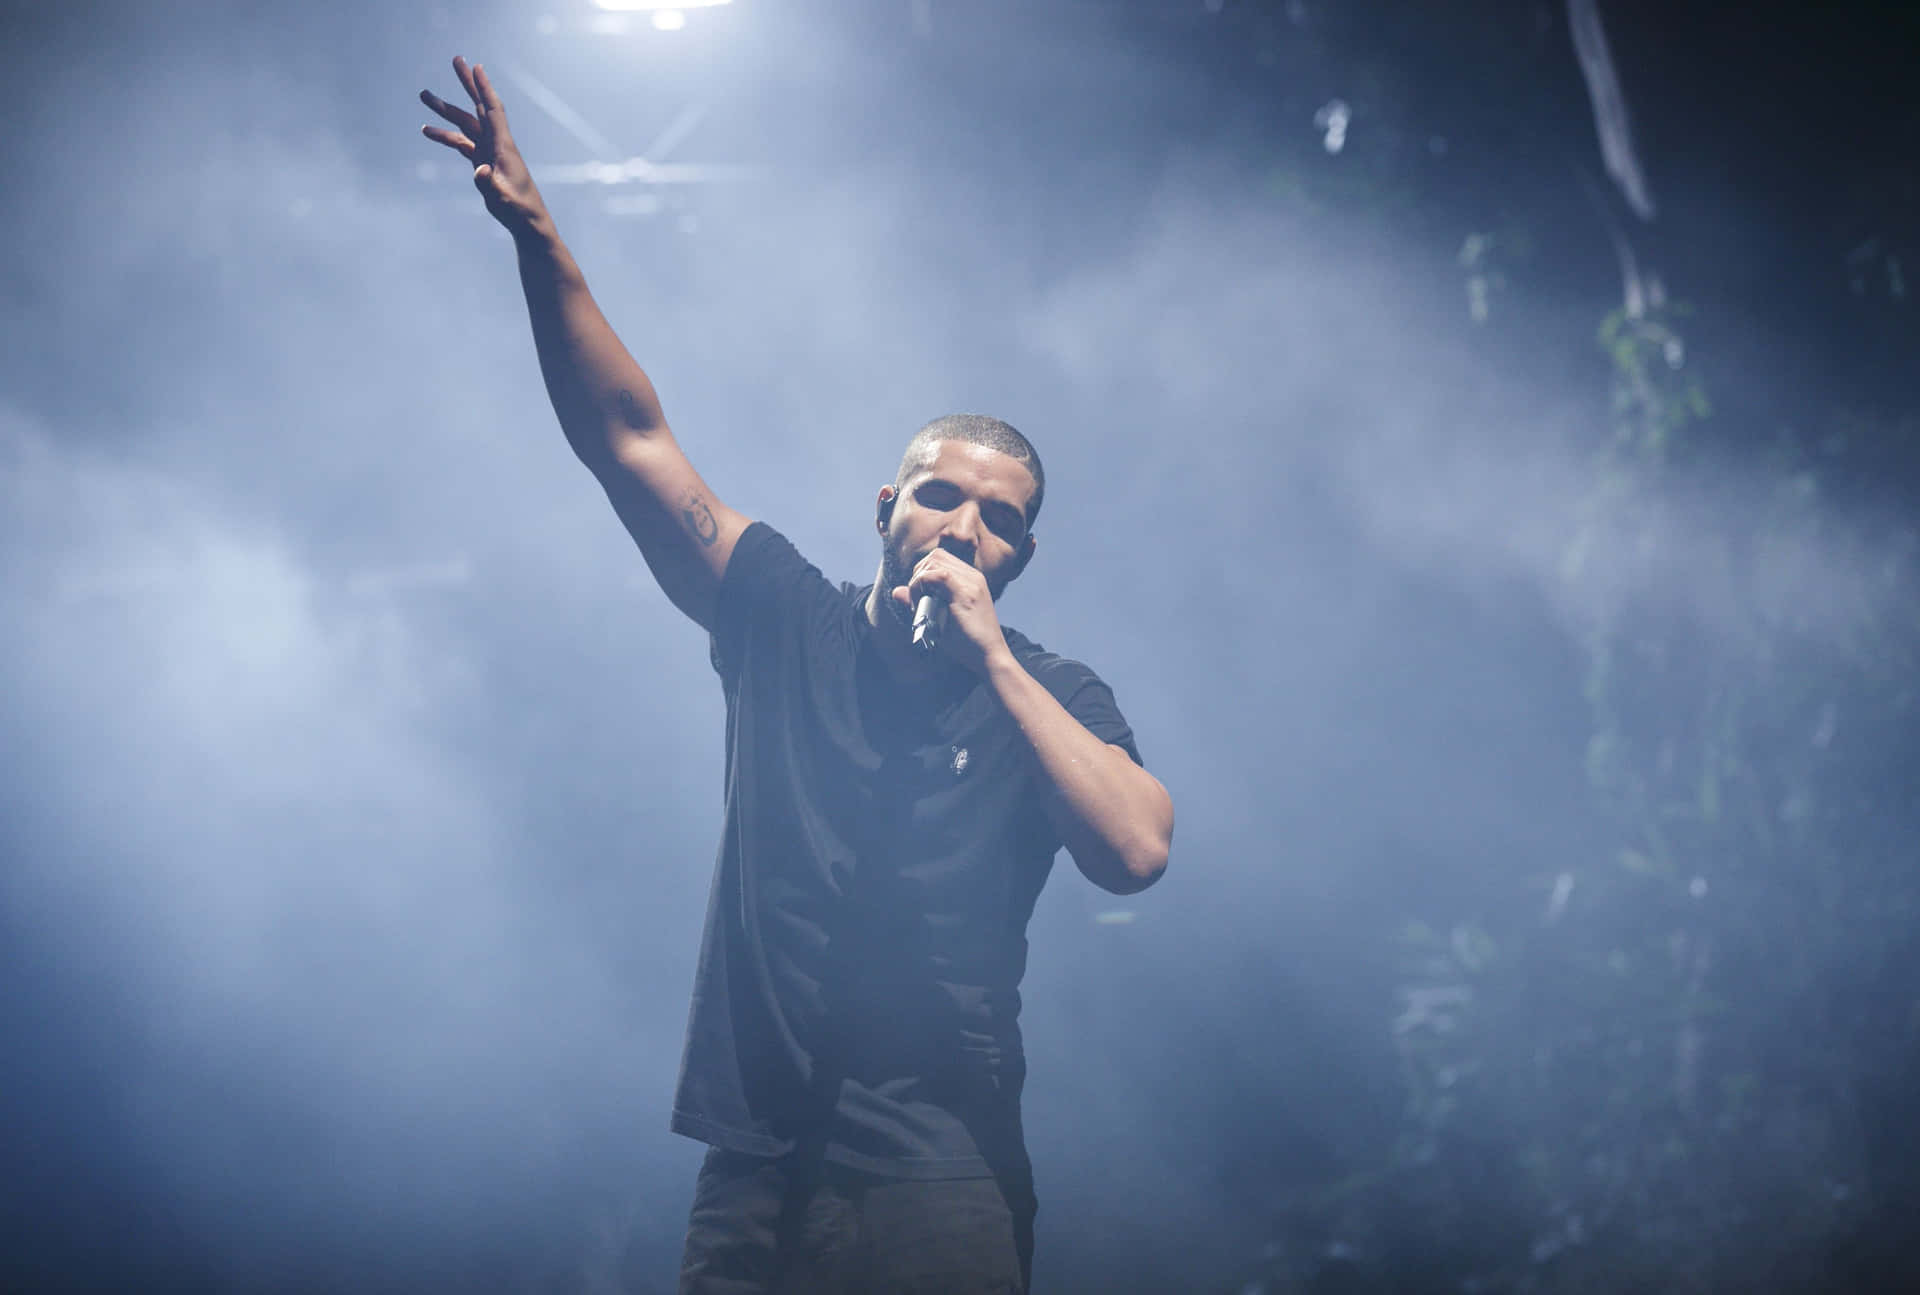 Caption: Award-winning artist Drake performing live on stage